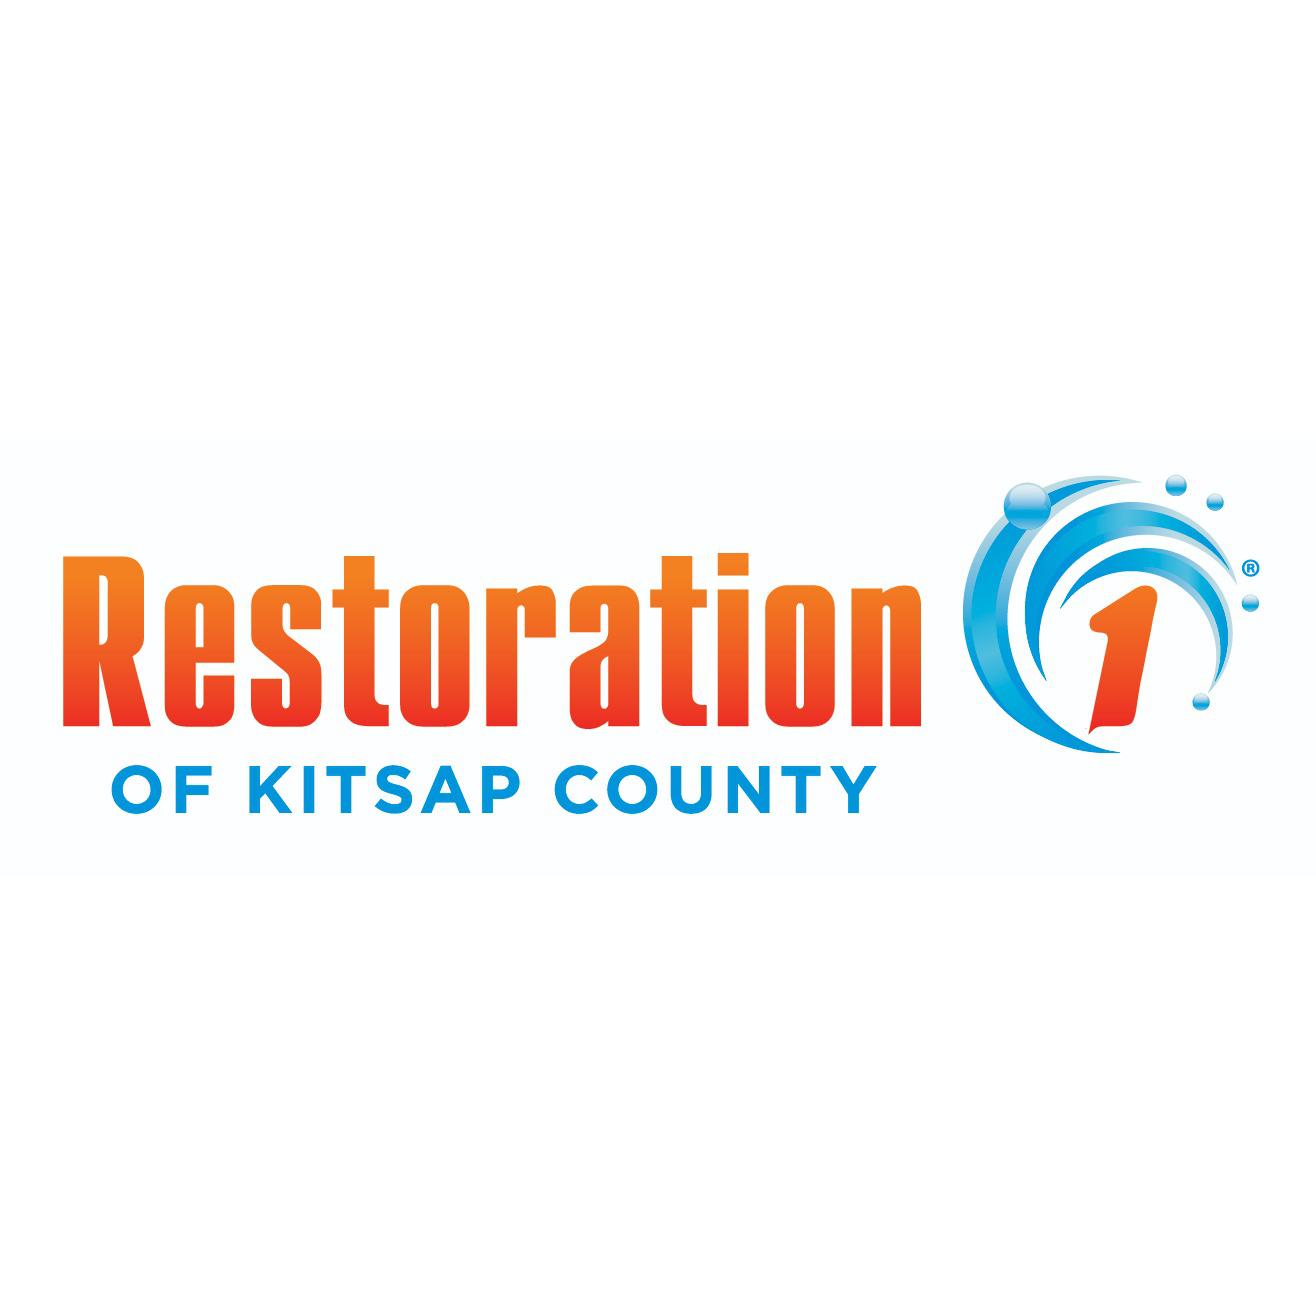 Restoration 1 of Kitsap County